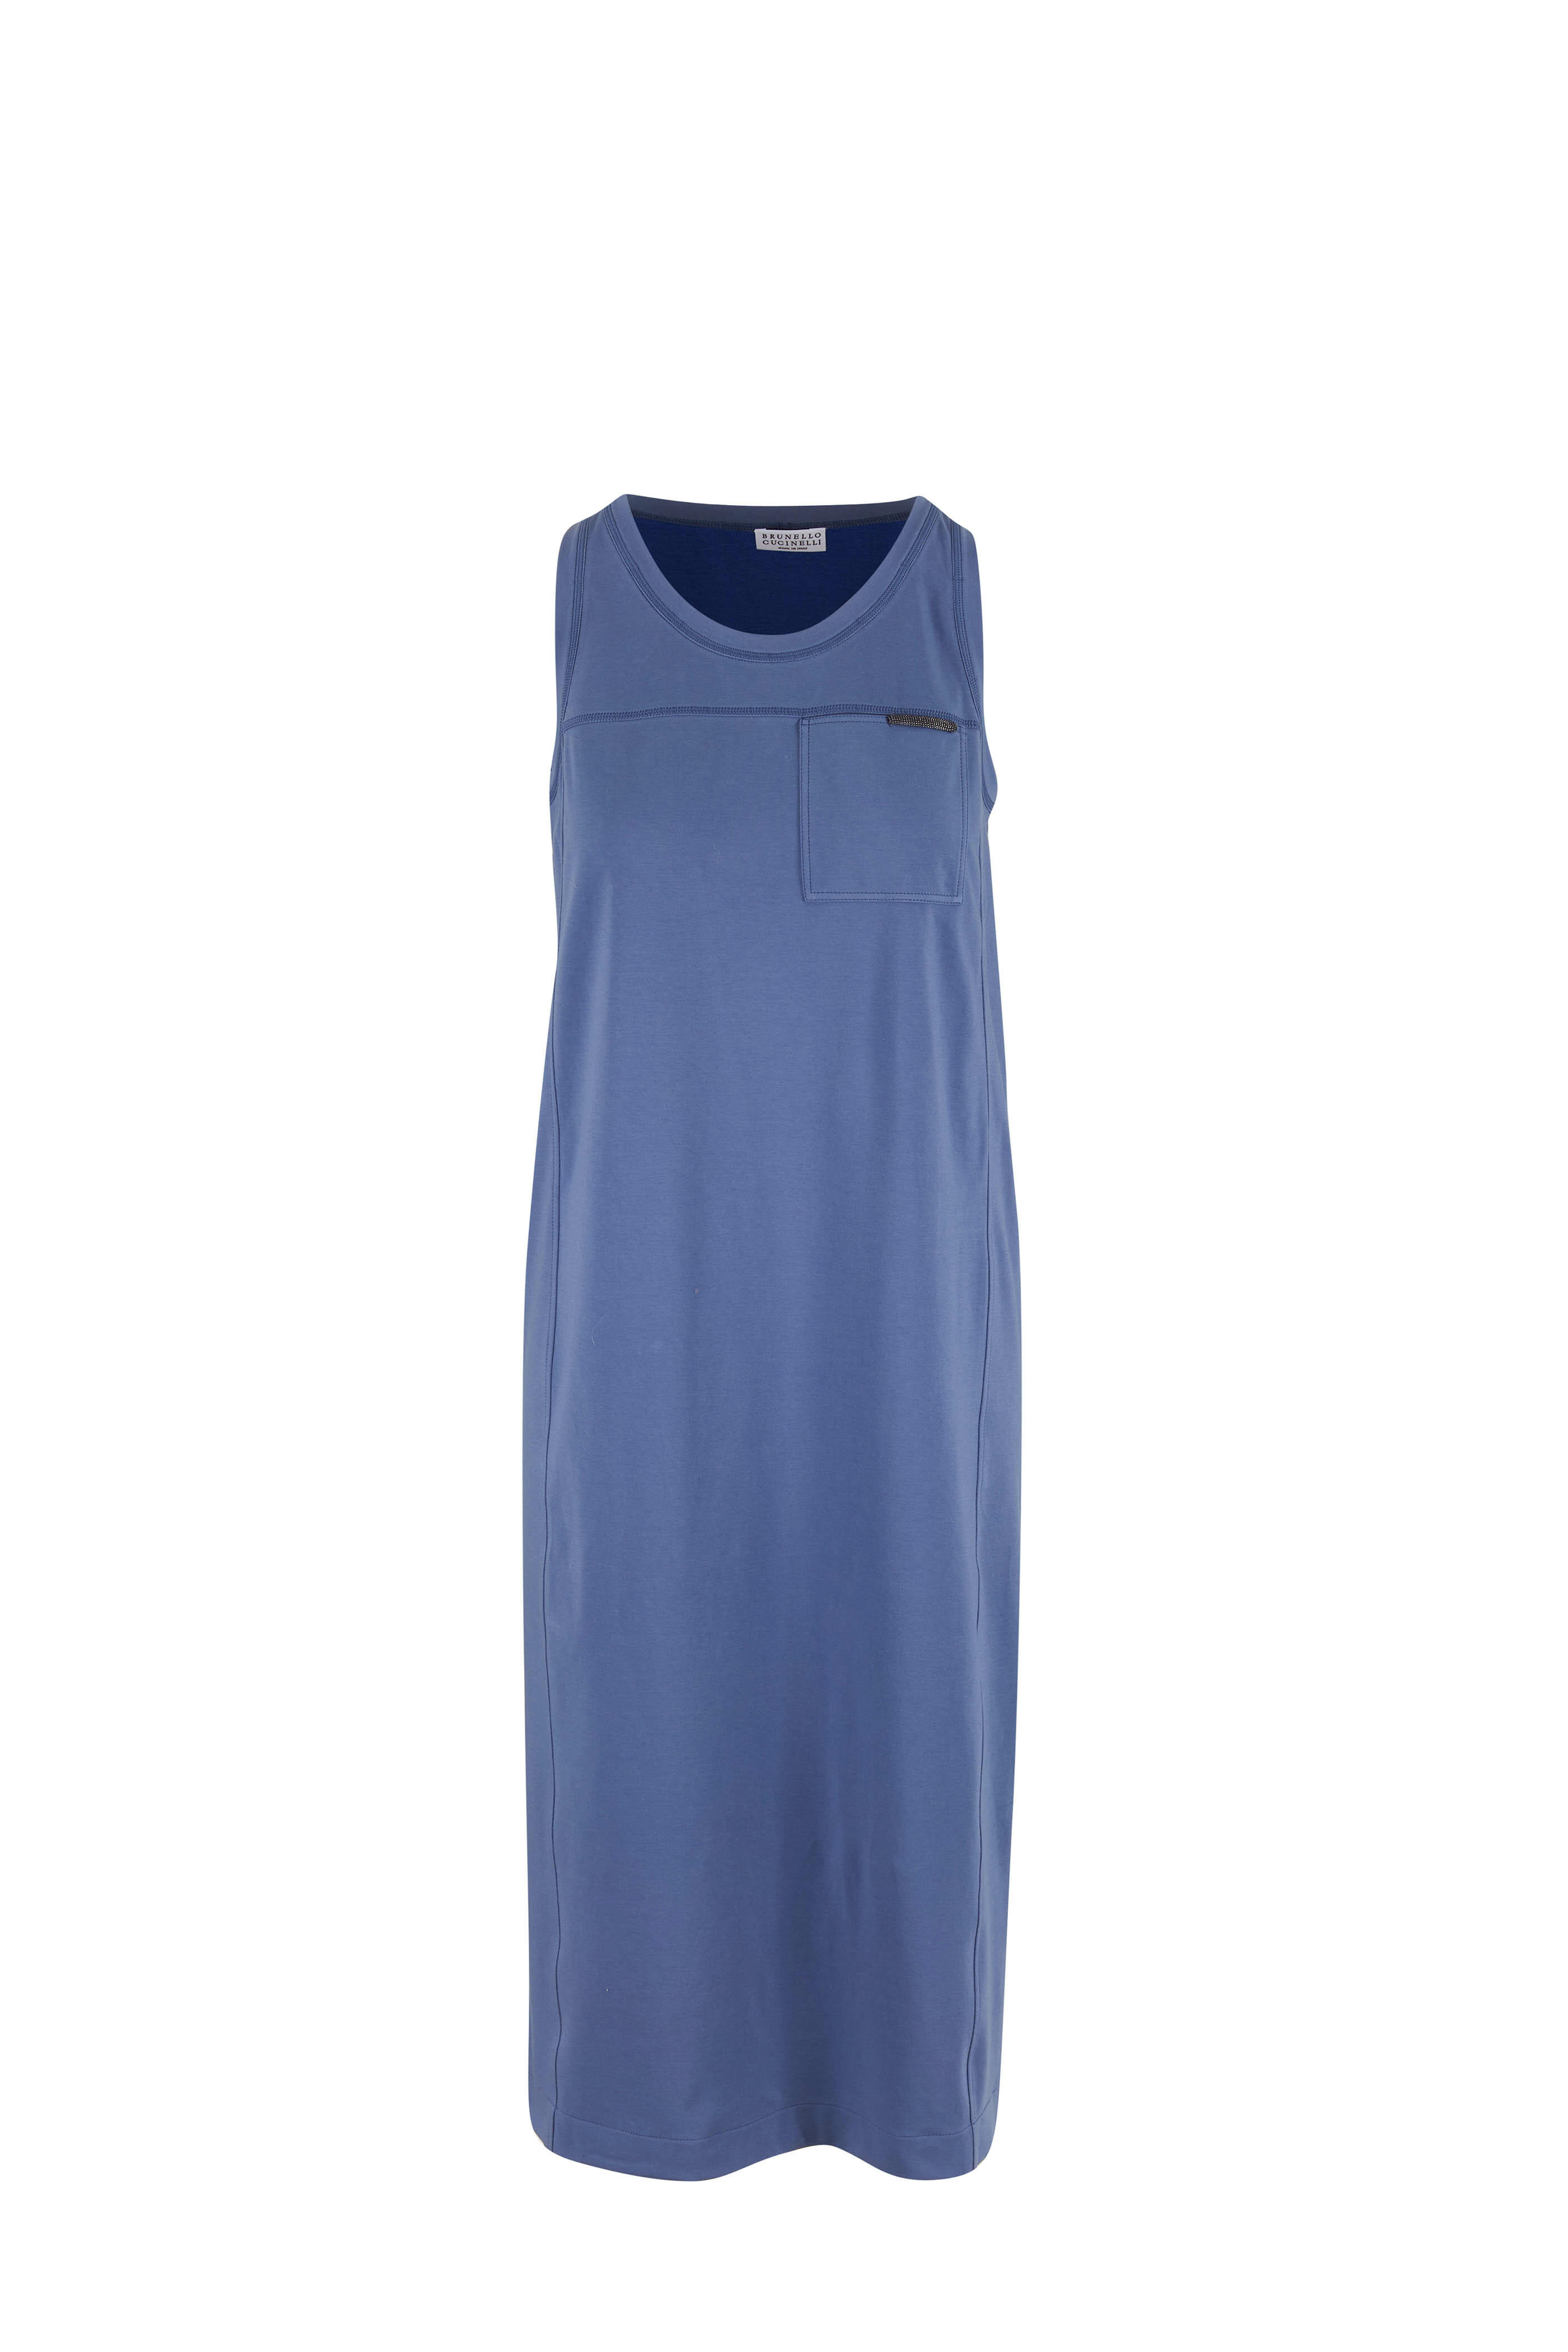 Brunello Cucinelli - Oxford Blue Cotton Jersey Tank Dress